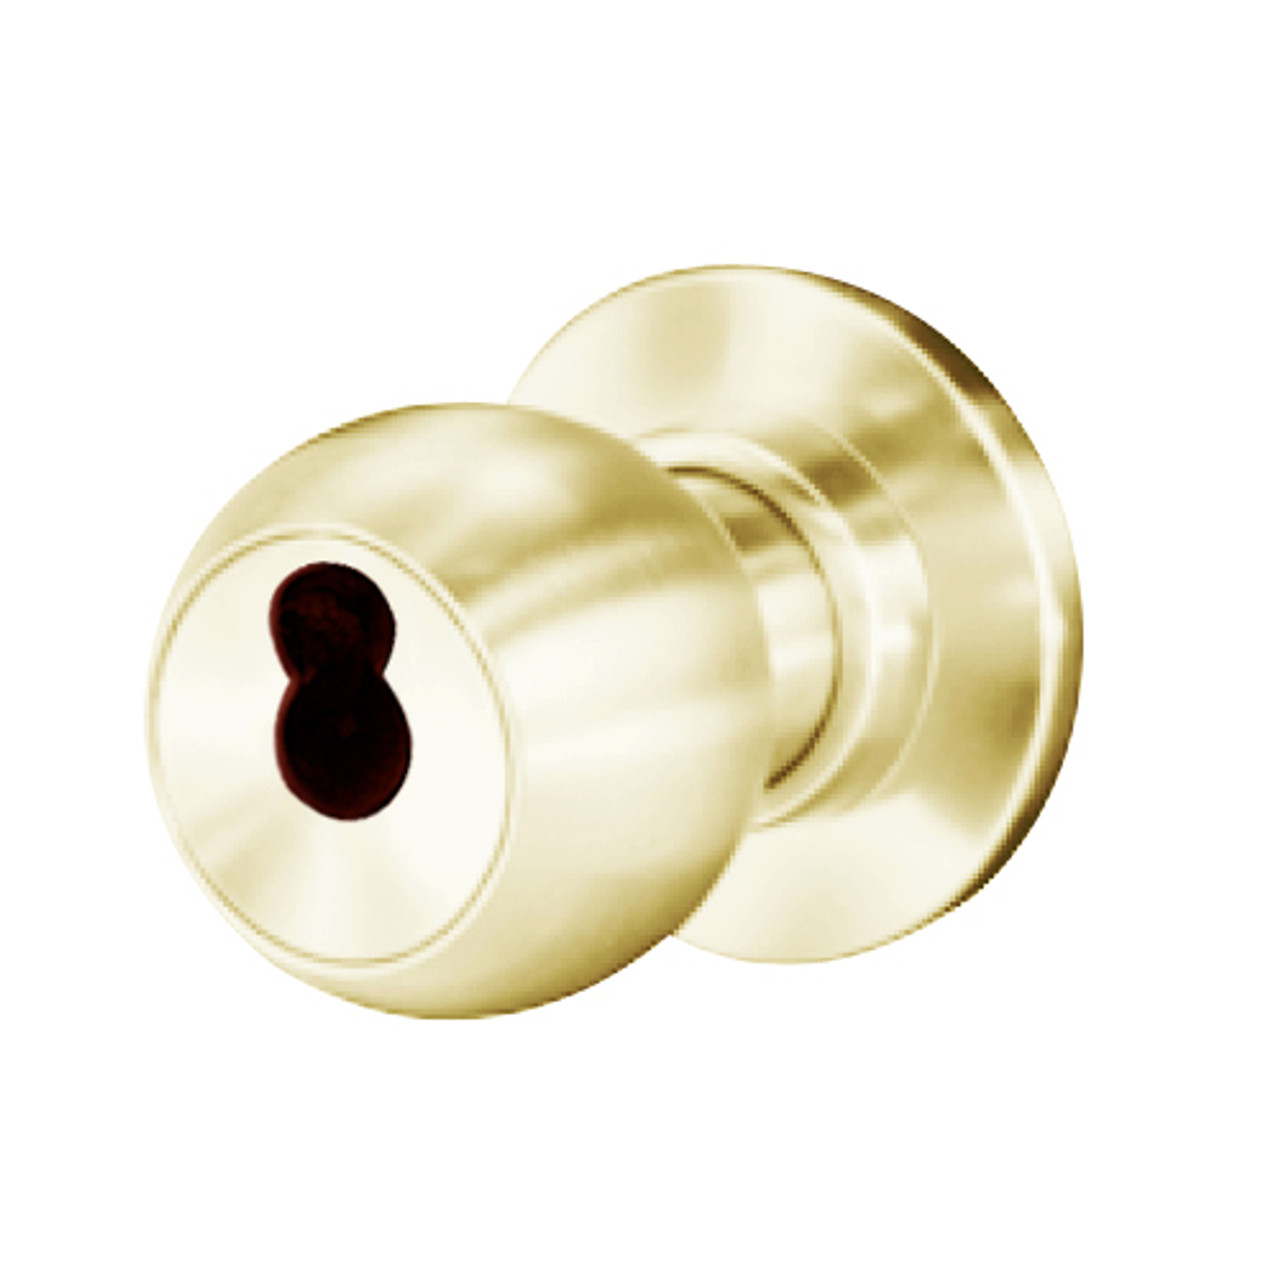 8K37S4CS3605 Best 8K Series Communicating Heavy Duty Cylindrical Knob Locks with Round Style in Bright Brass